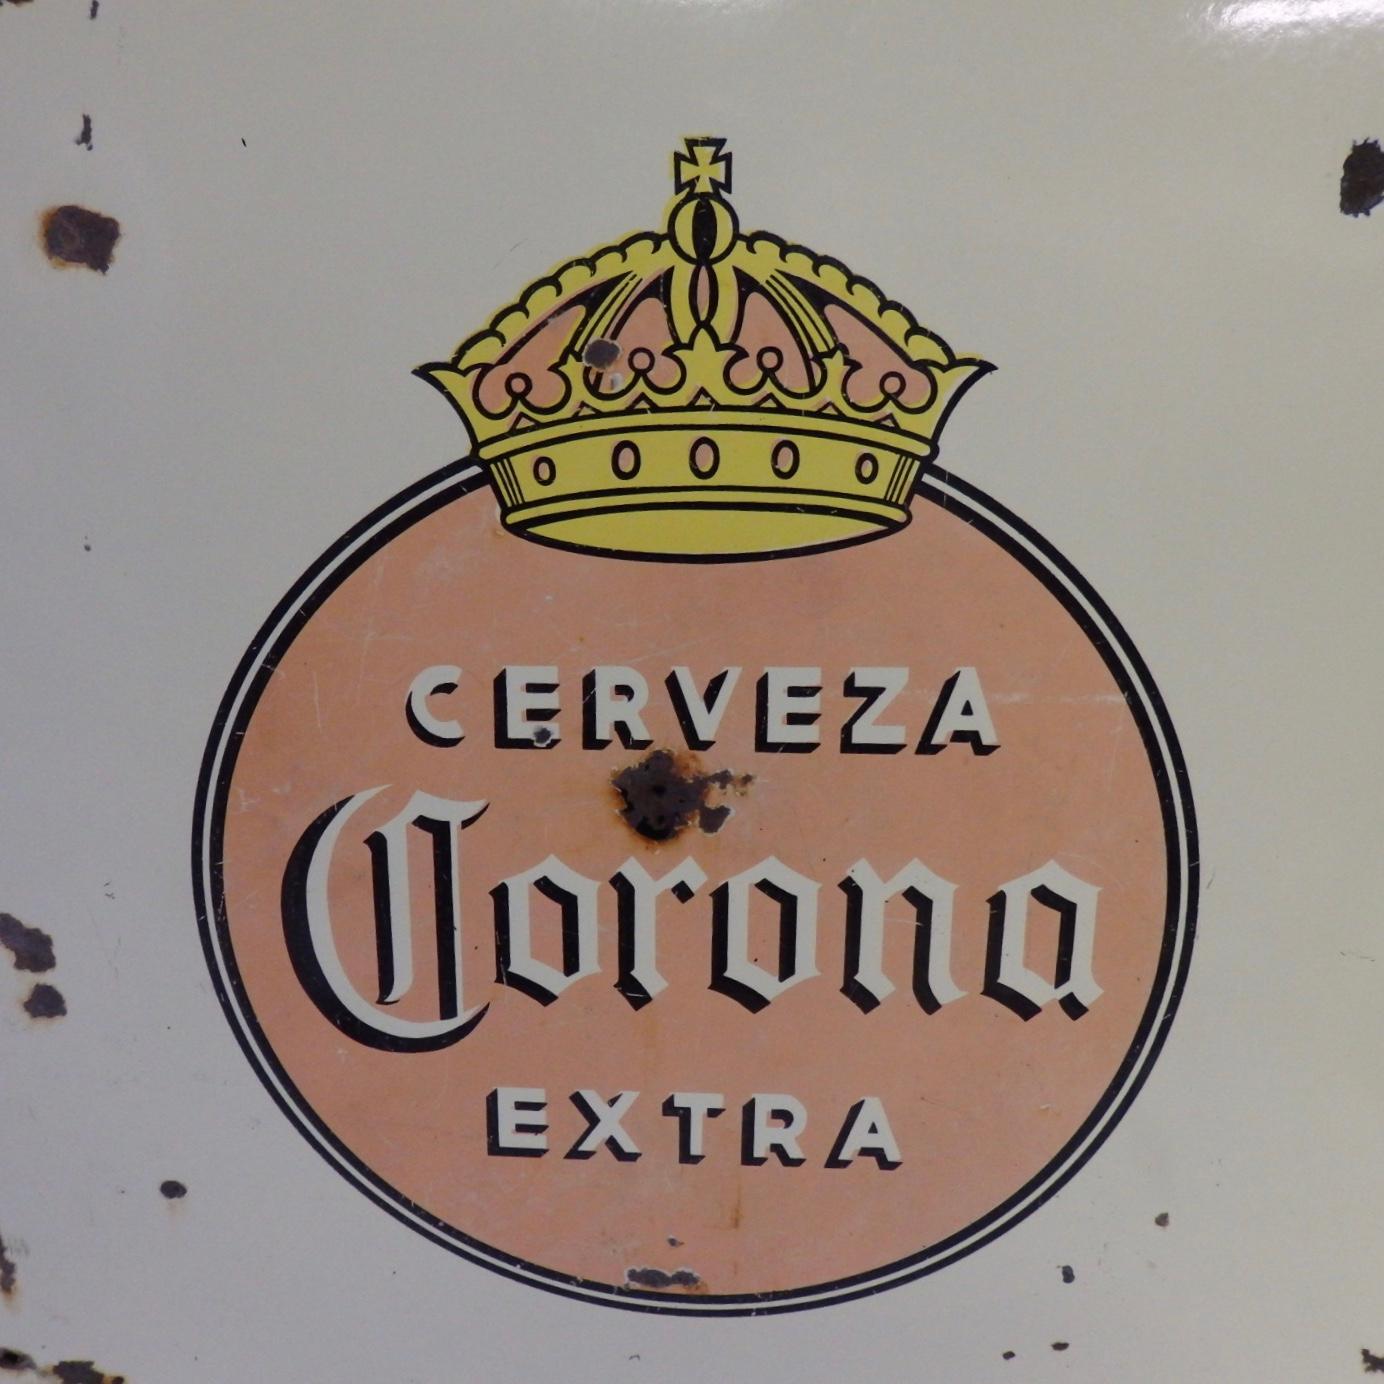 corona beer advertising